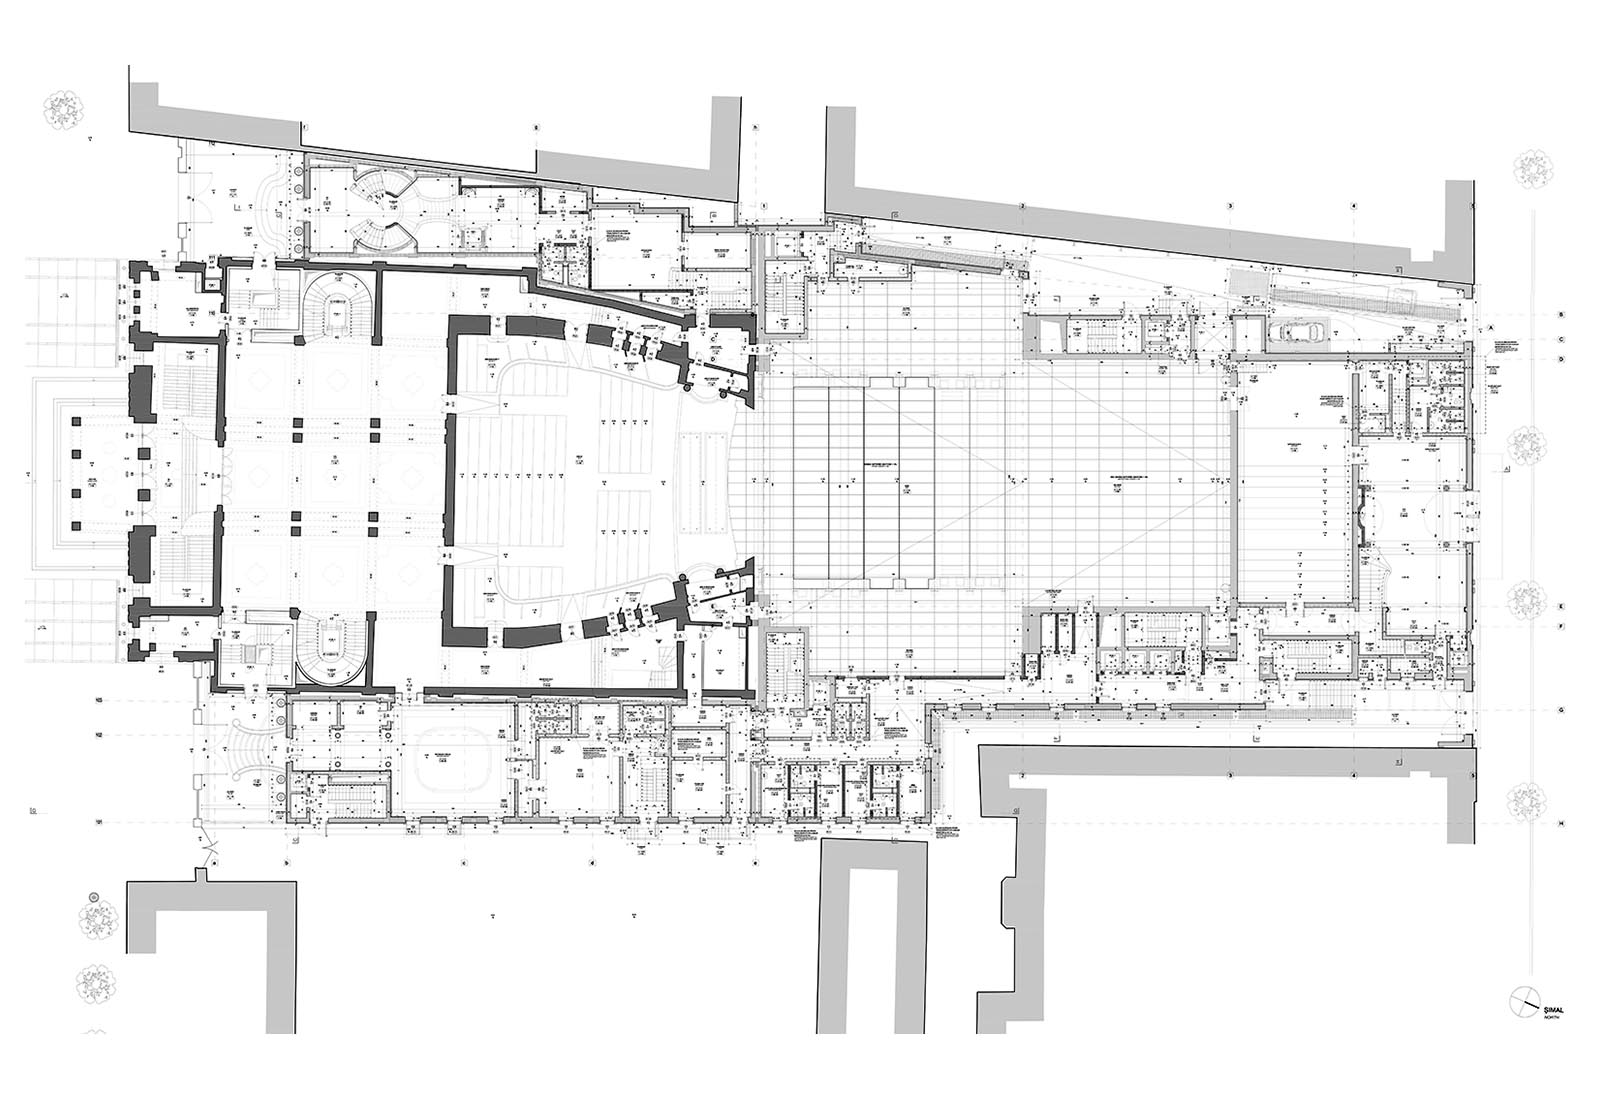 Baku Opera and Ballet Theatre - Ground floor plan